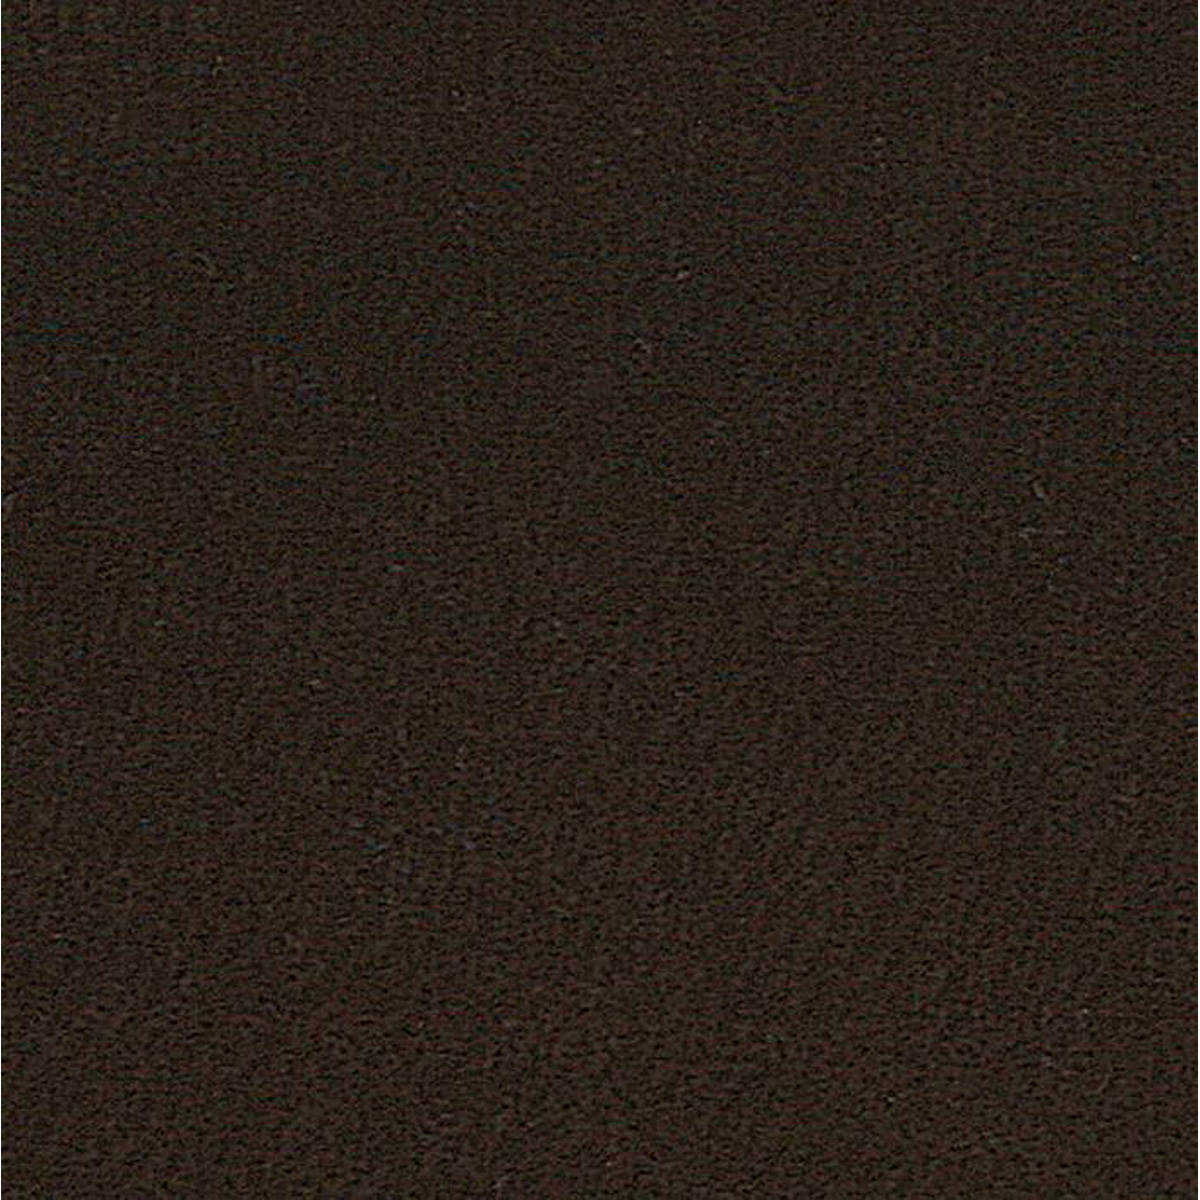 Messetæppe plane/latex 2x60m - Mørk brun